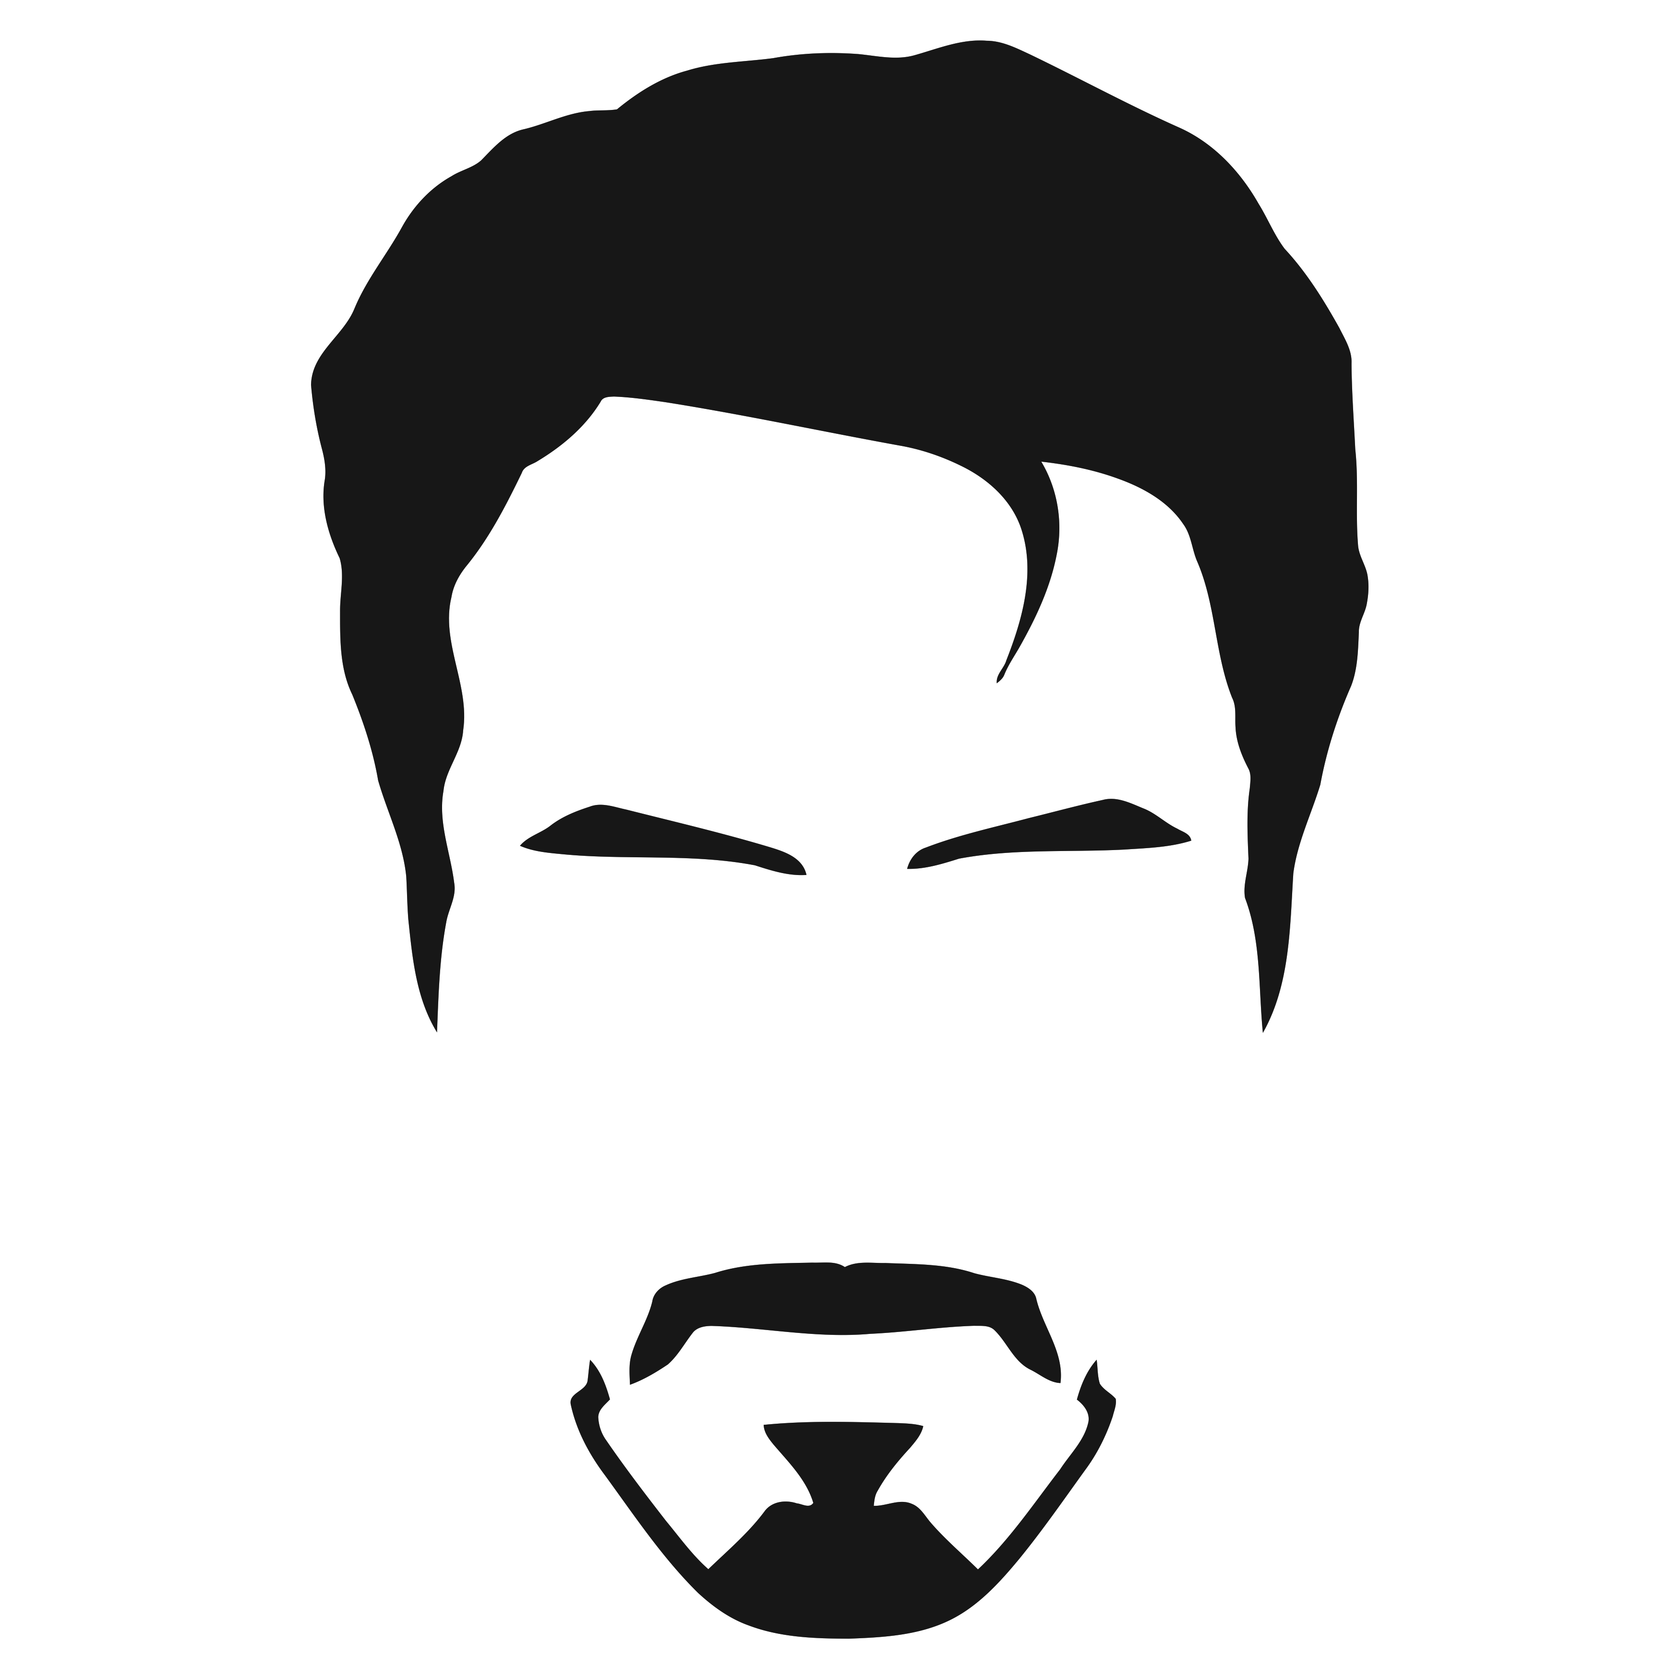 Лицо стаса михайлова для маски. Тони Старк борода. Логотип лицо. Контур мужского лица. Логотип лицо мужчины.